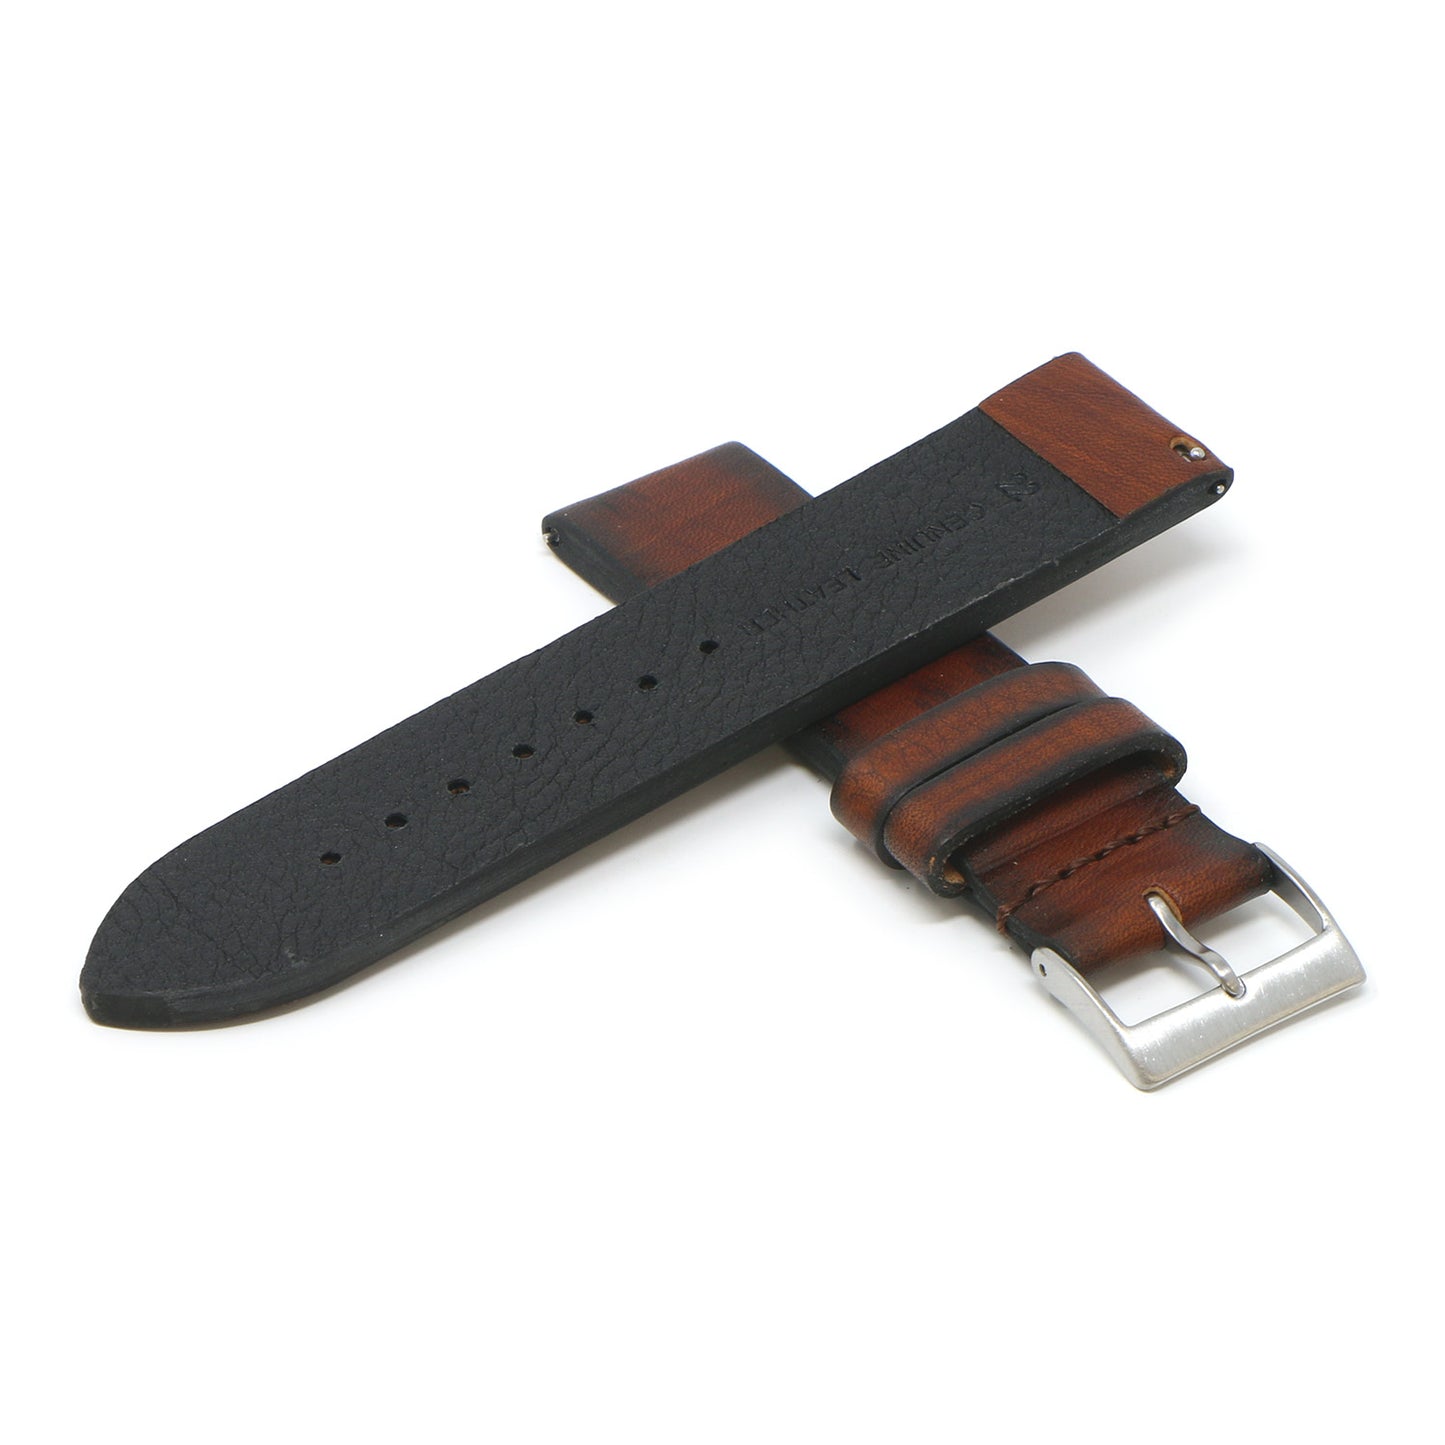 DASSARI Premium Thick Vintage Leather Strap for Apple Watch